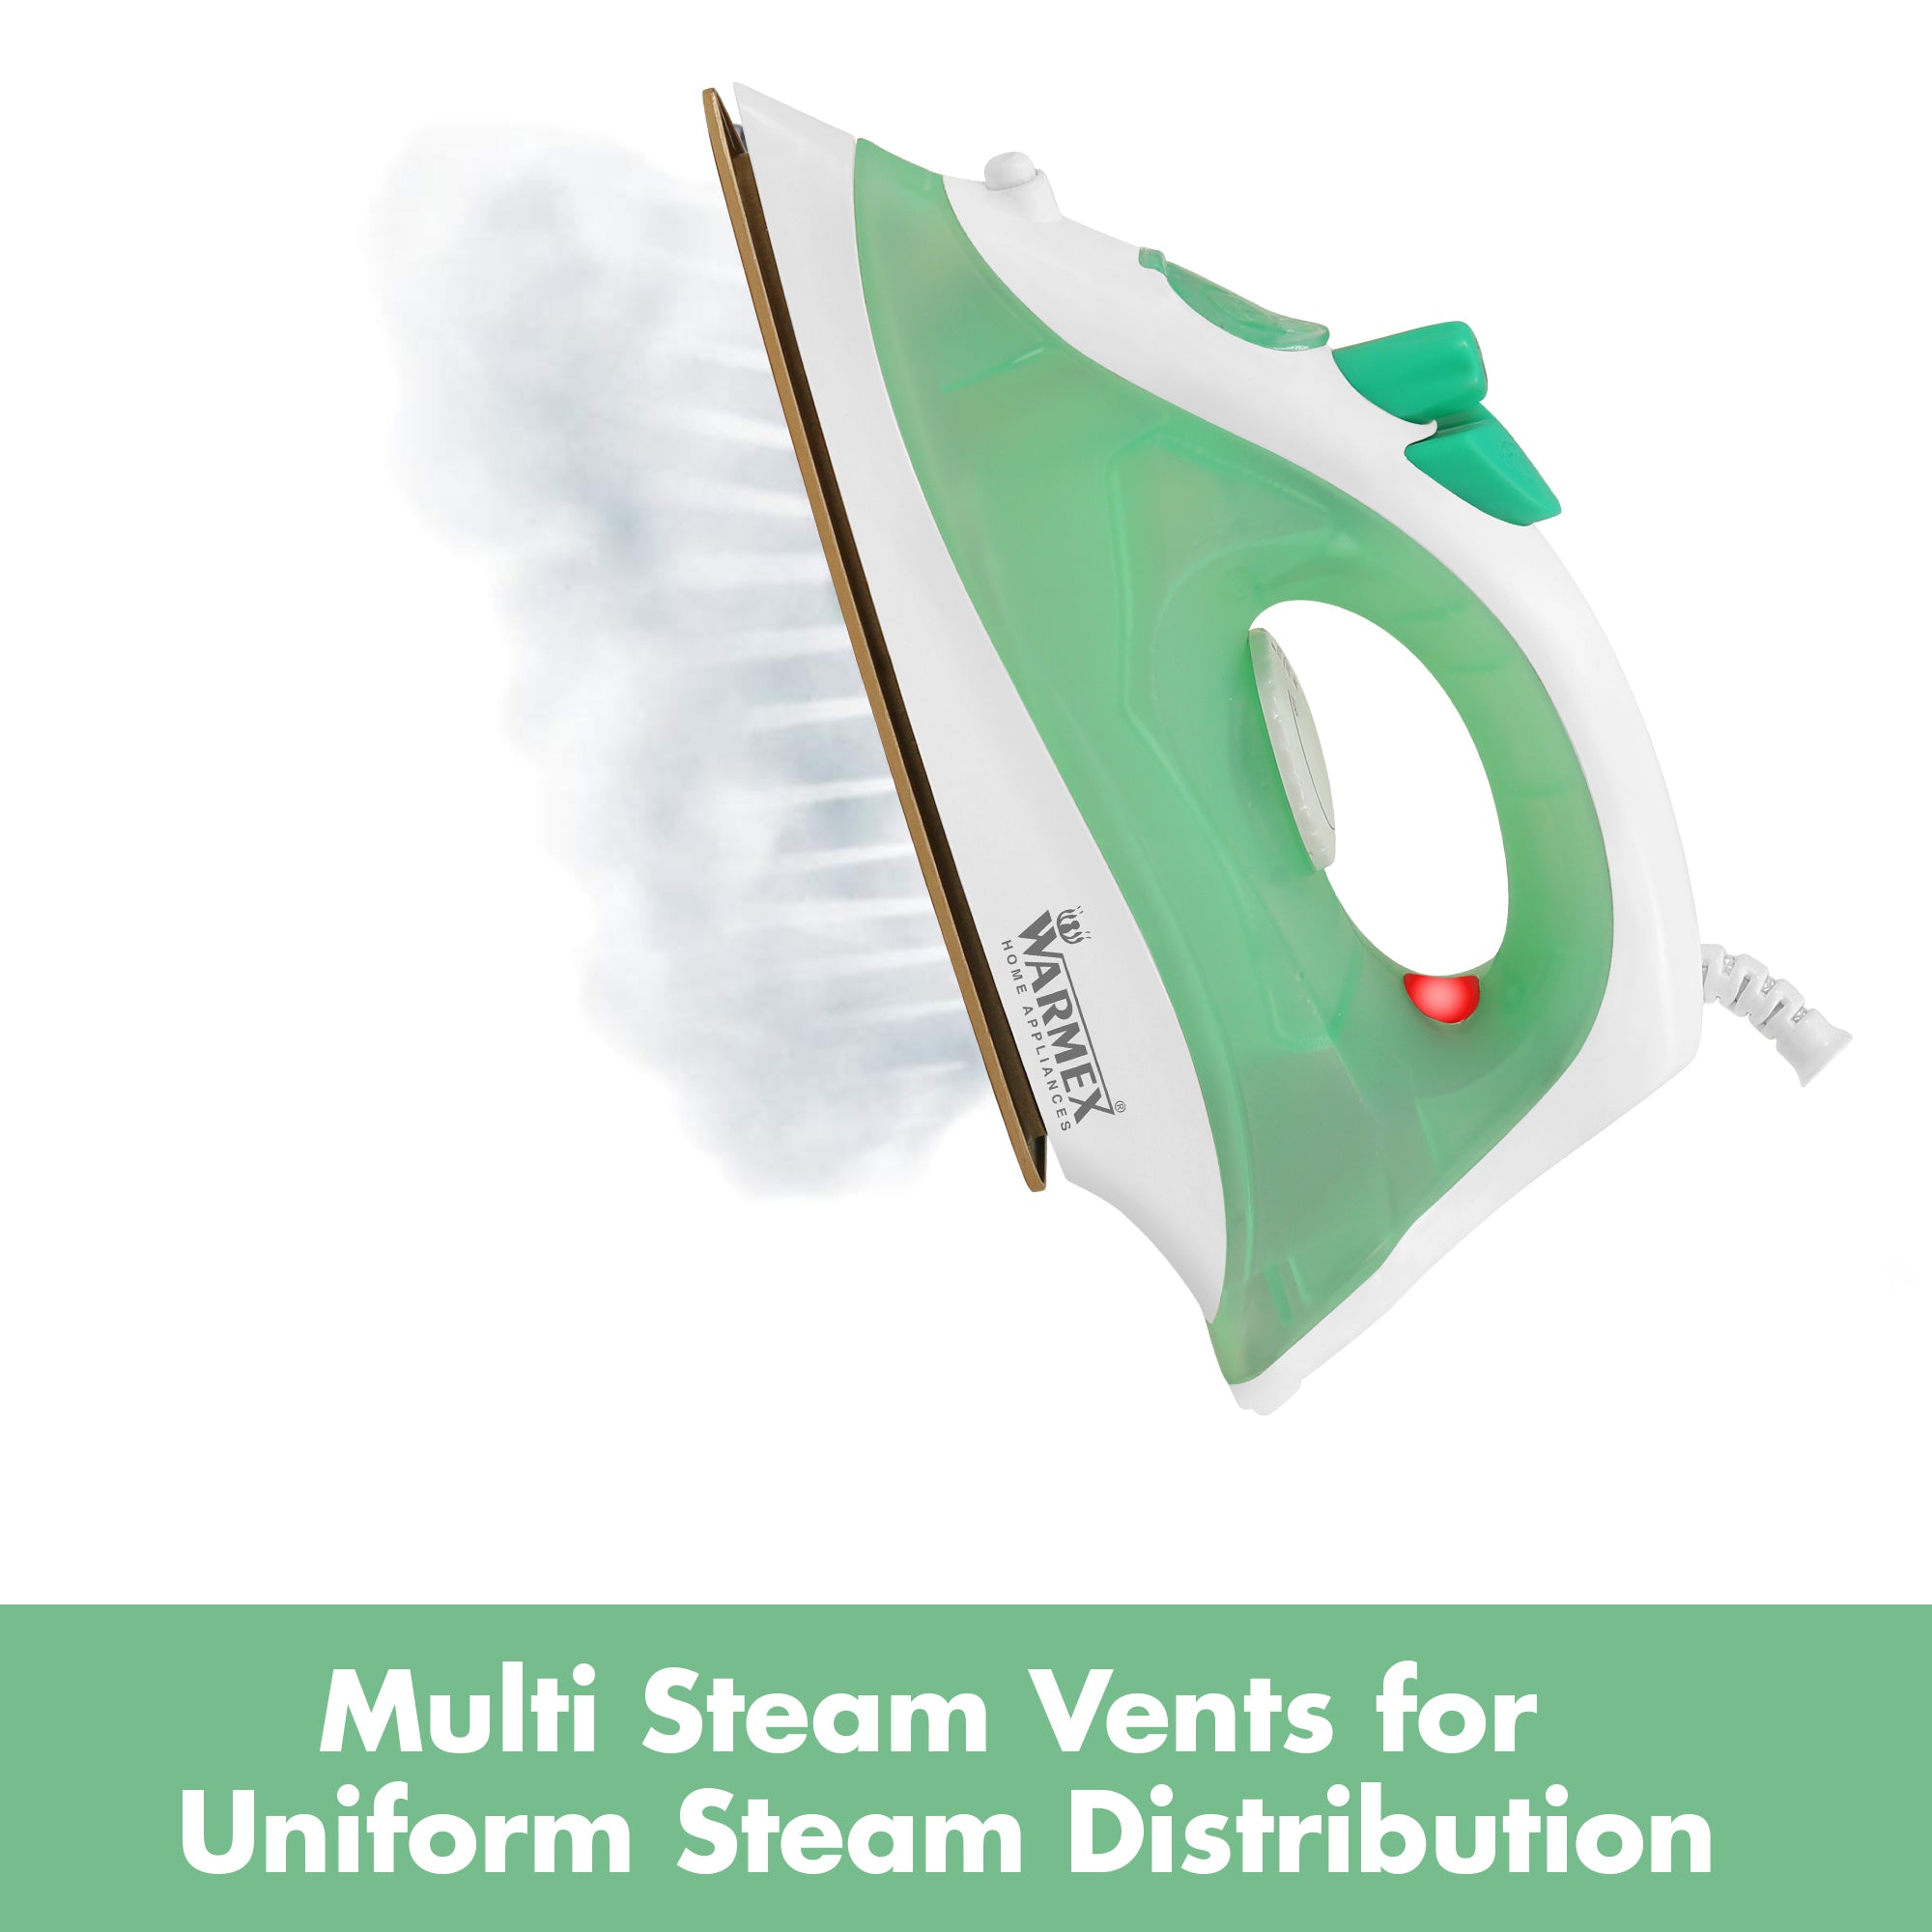 Warmex Steam Glide (Green) warmexhomeappliances